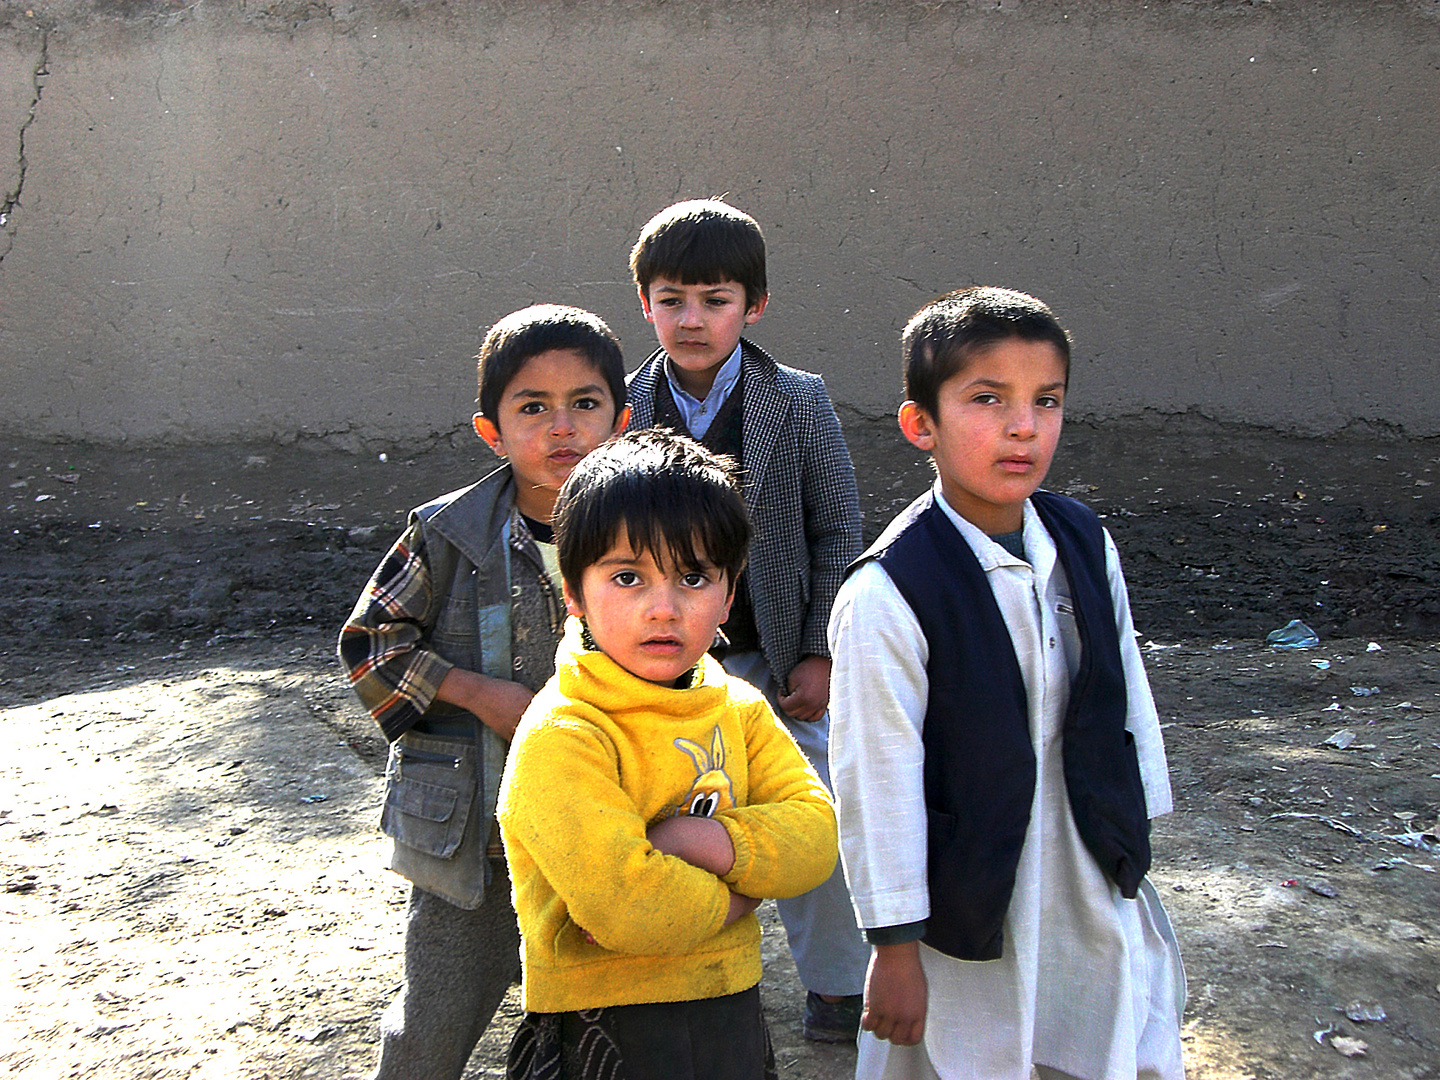 Children of Afghanistan